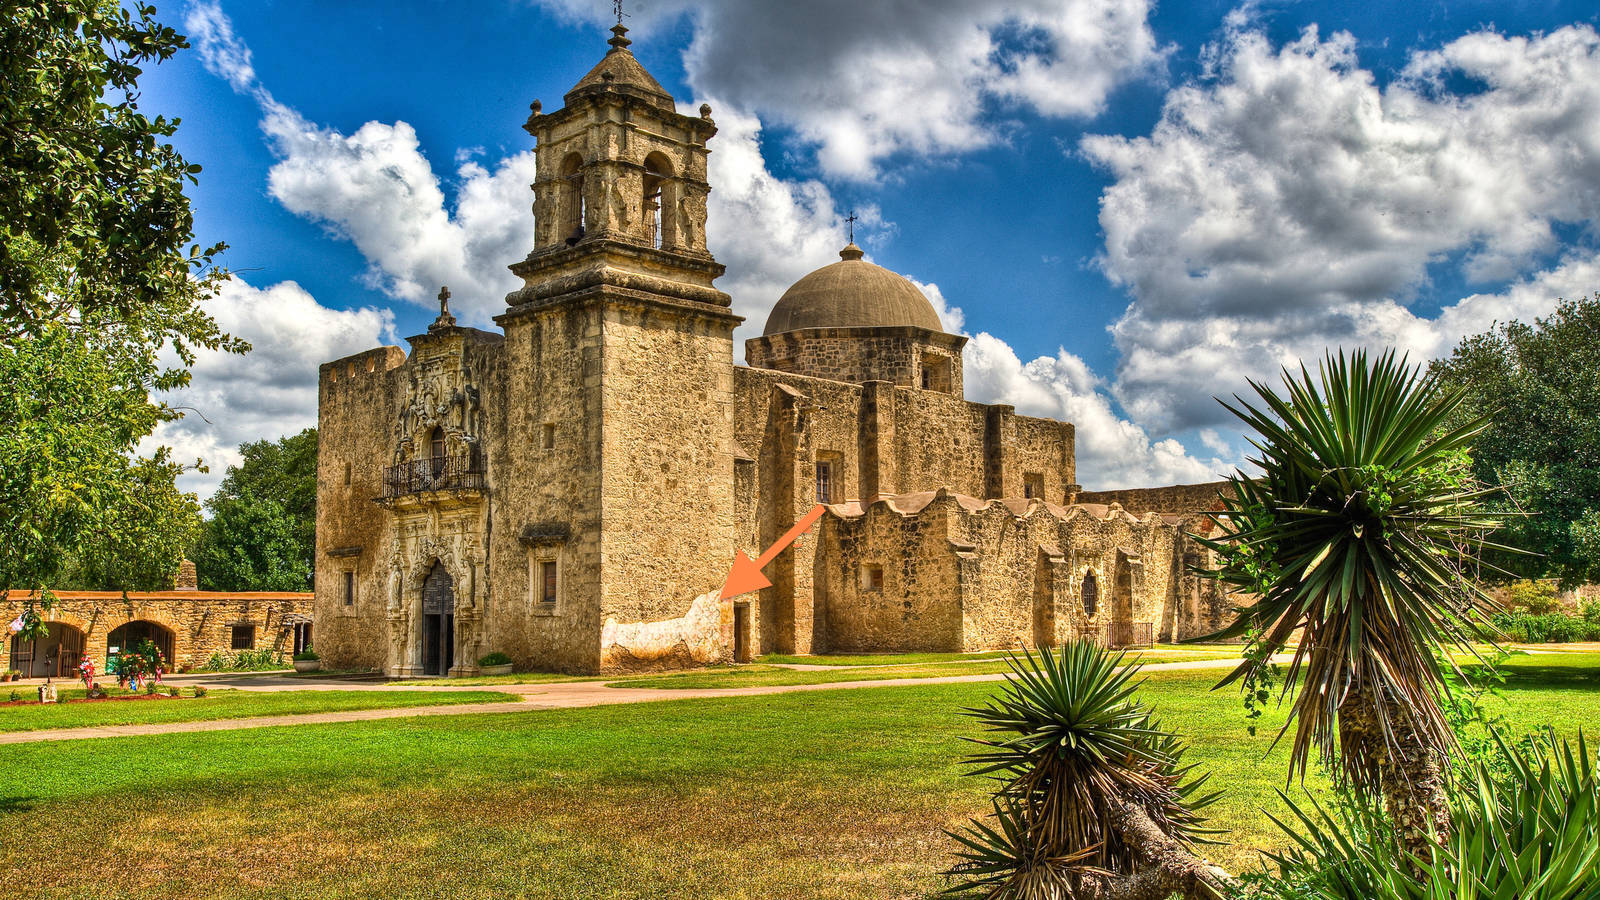 San-Antonio-Missions-National-Historical-Park.jpg